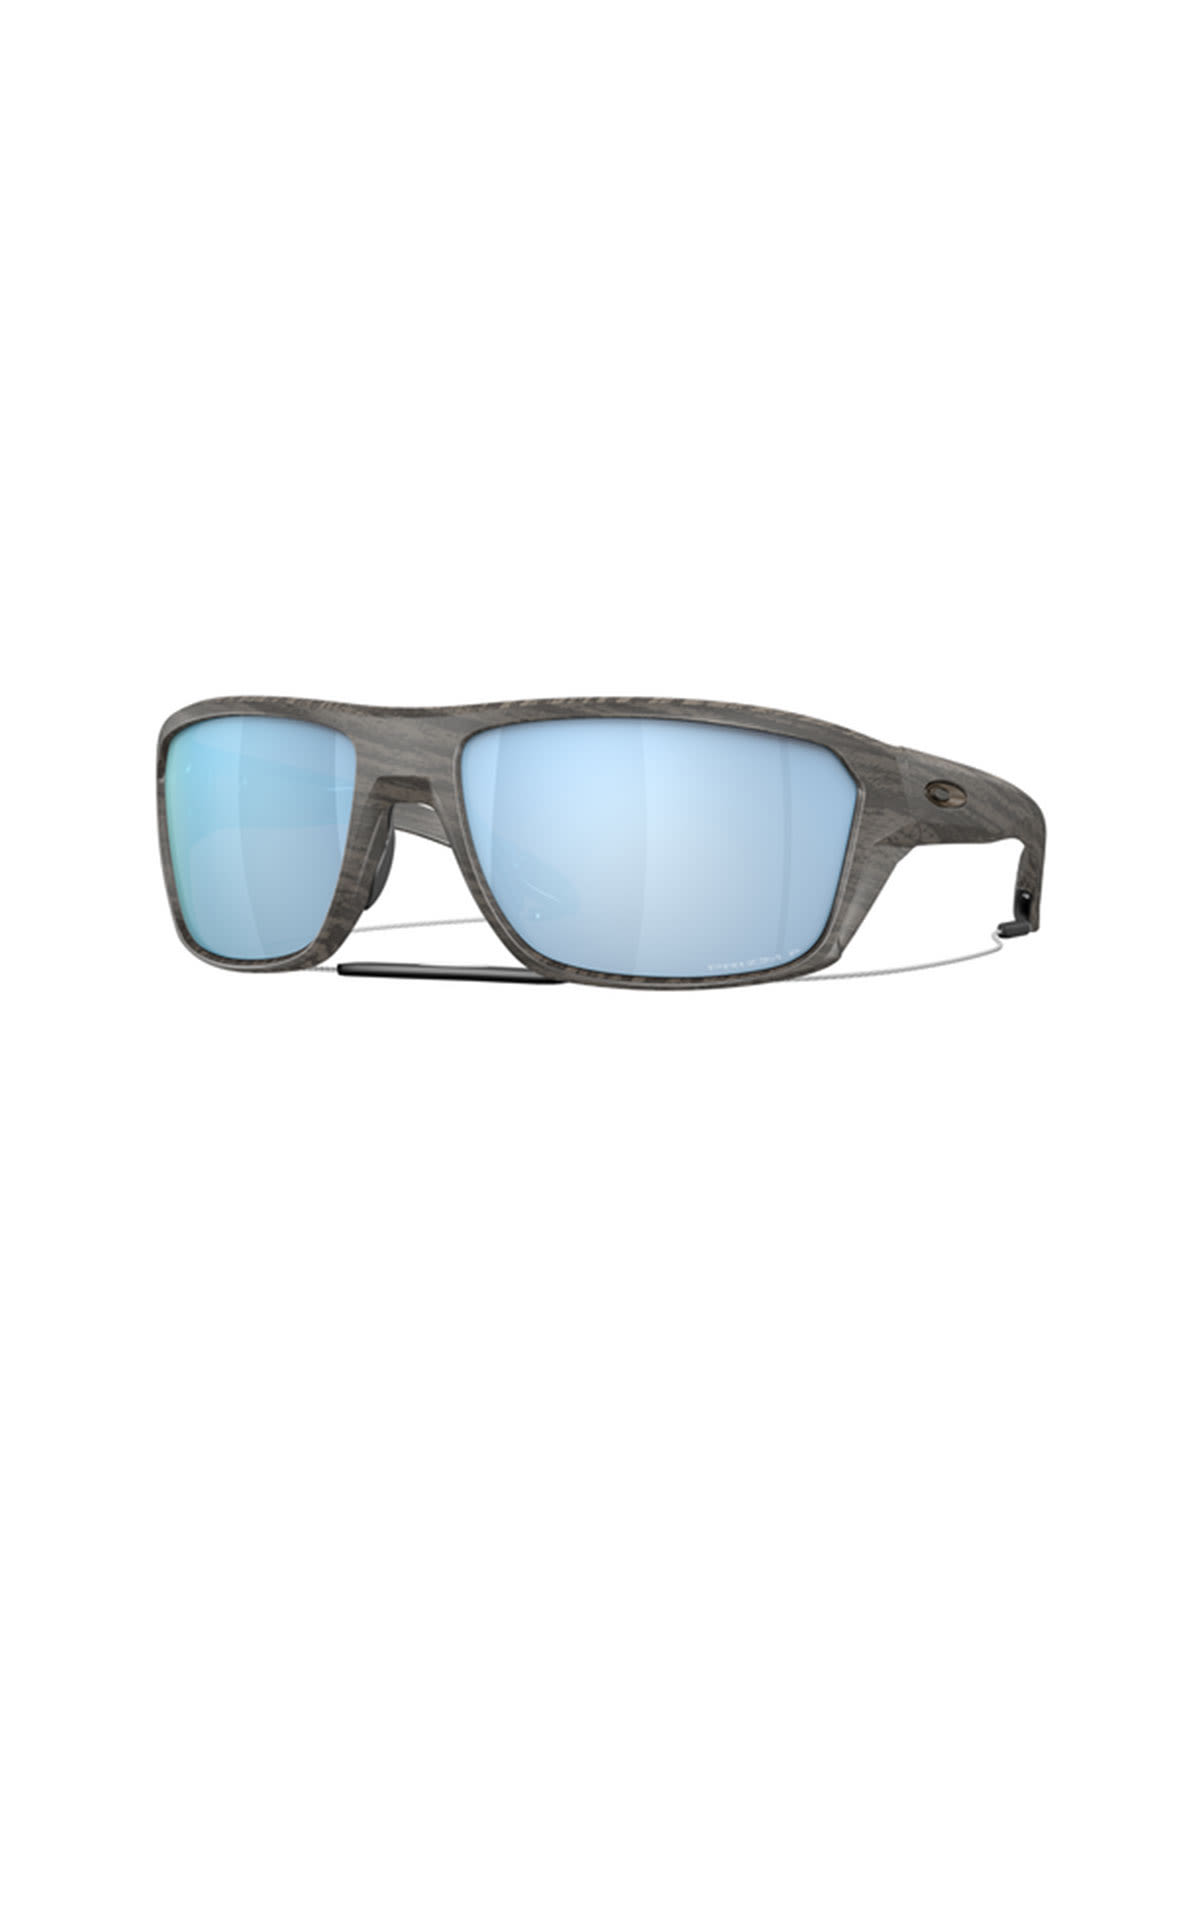 Black sunglasses with blue lens Sunglass Hut